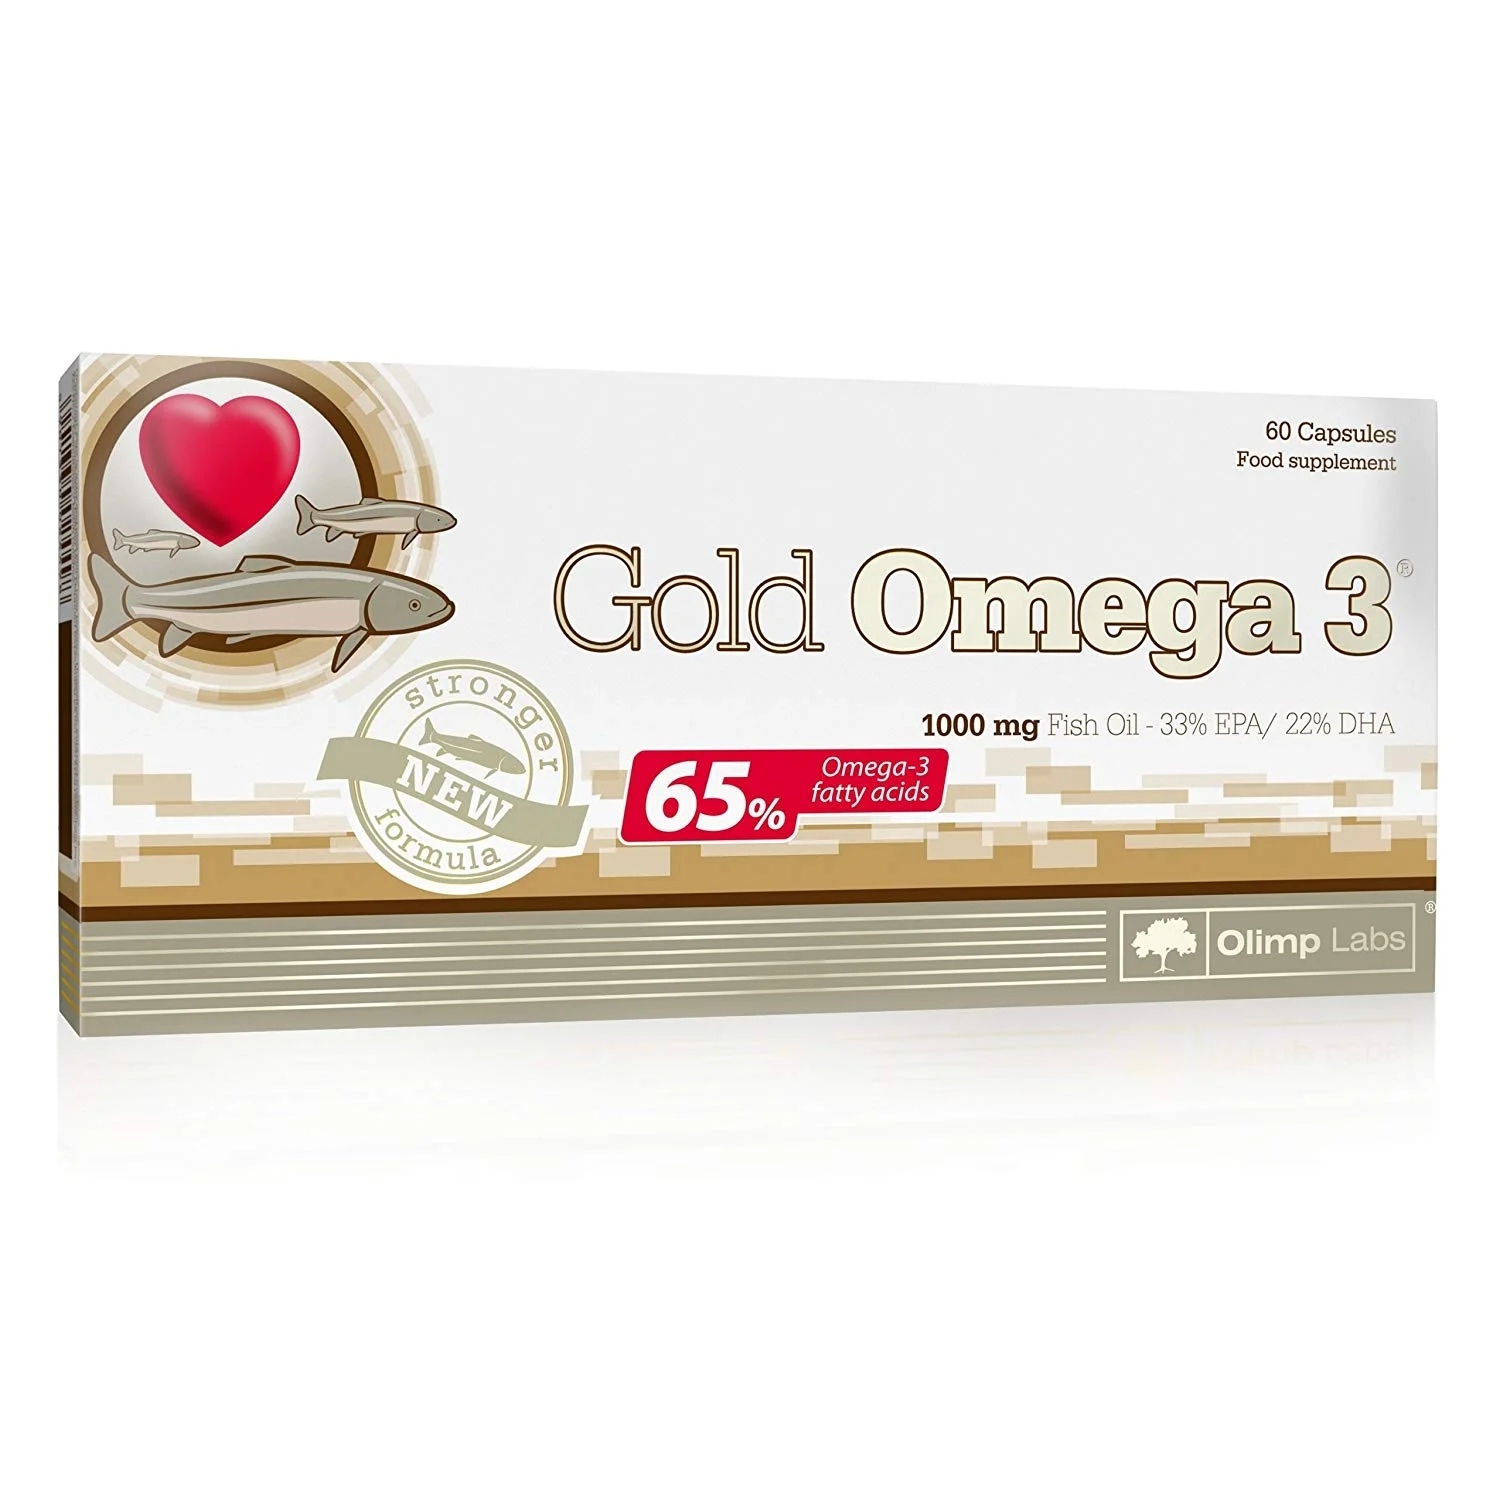 Olimp Omega 3 Gold 65% 60 capsules